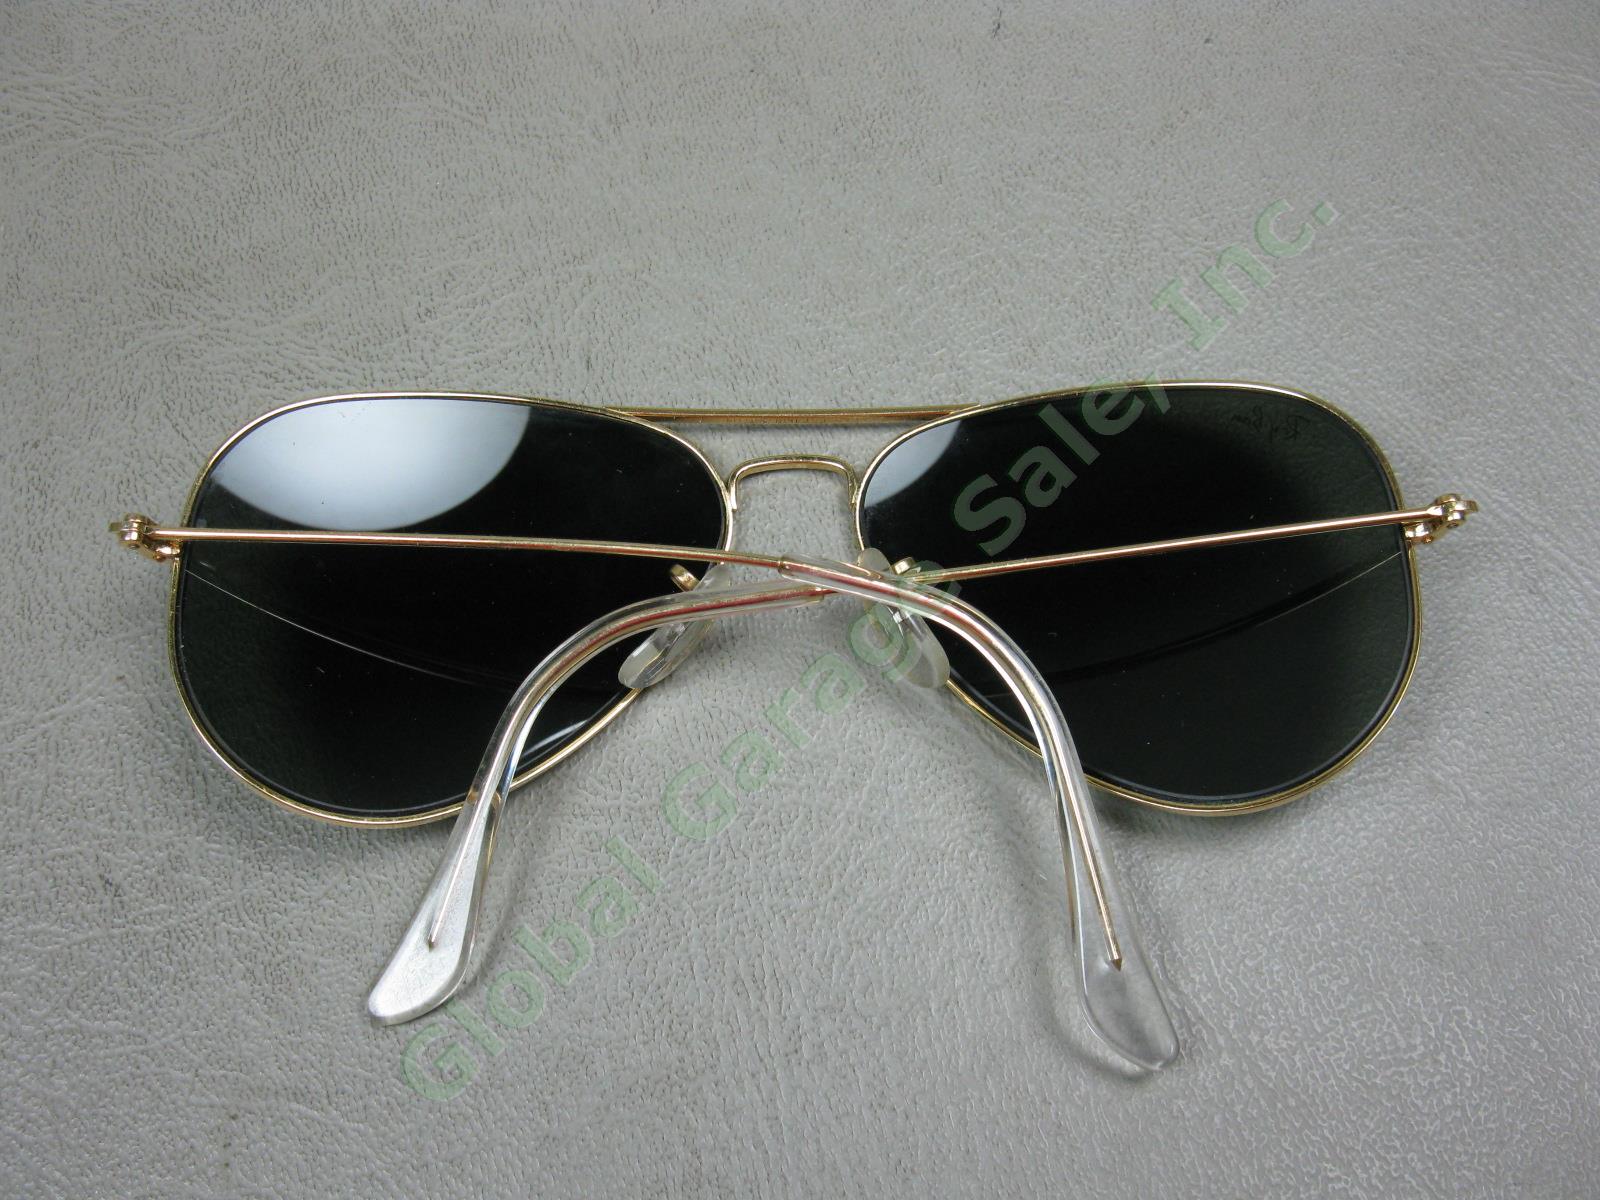 B&L Ray Ban 58 14 Green Lens Gold Aviator Outdoorsman Sunglasses +Belt-Loop Case 3